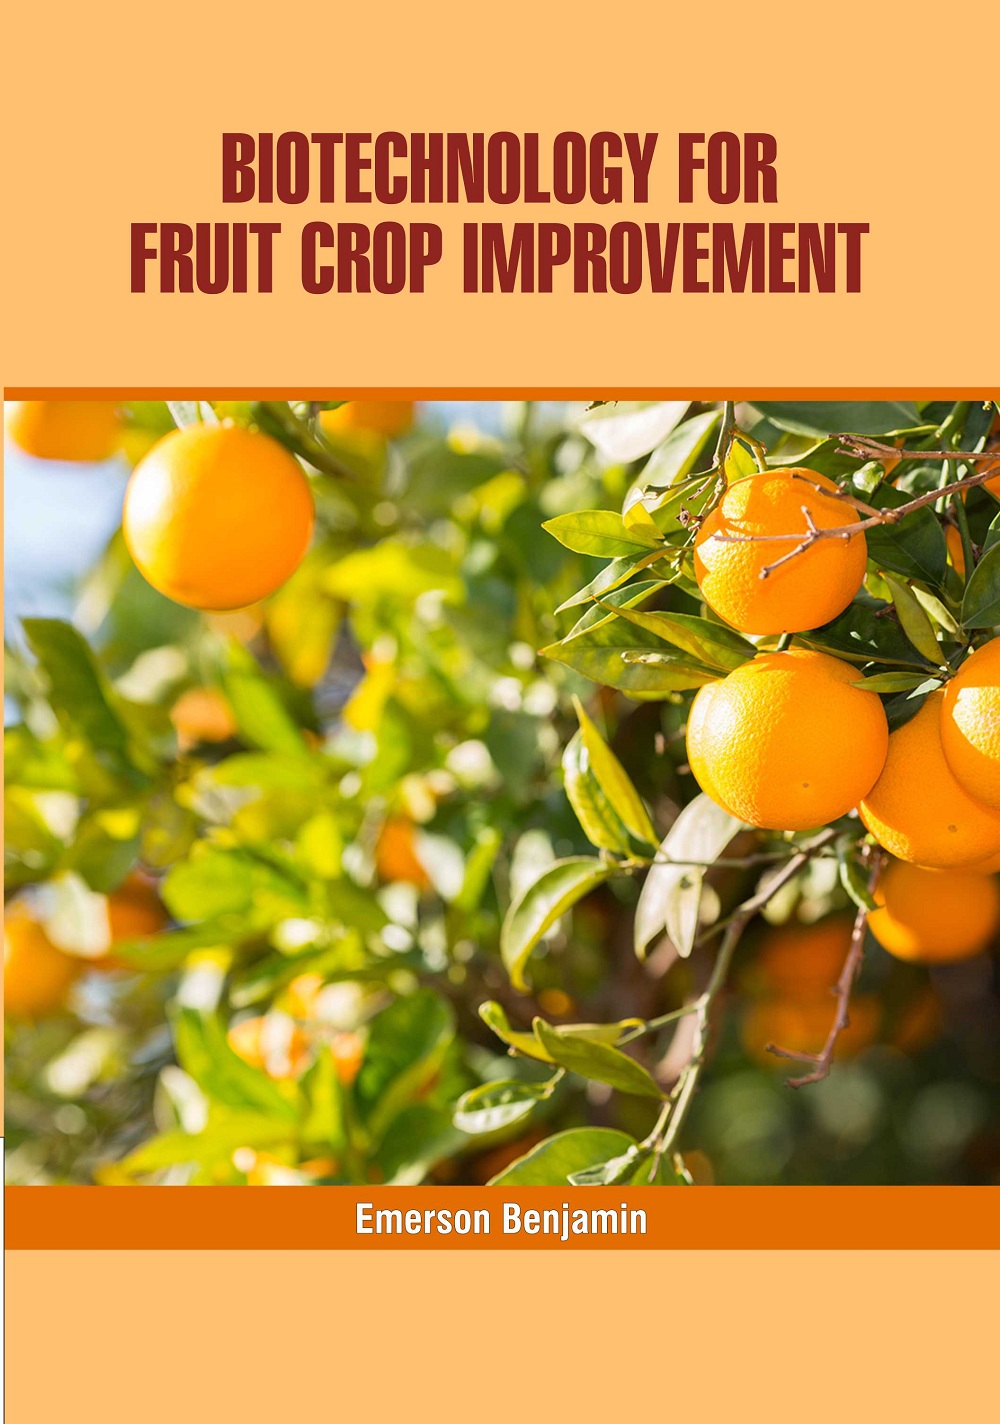 Biotechnology for Fruit Crop Improvement